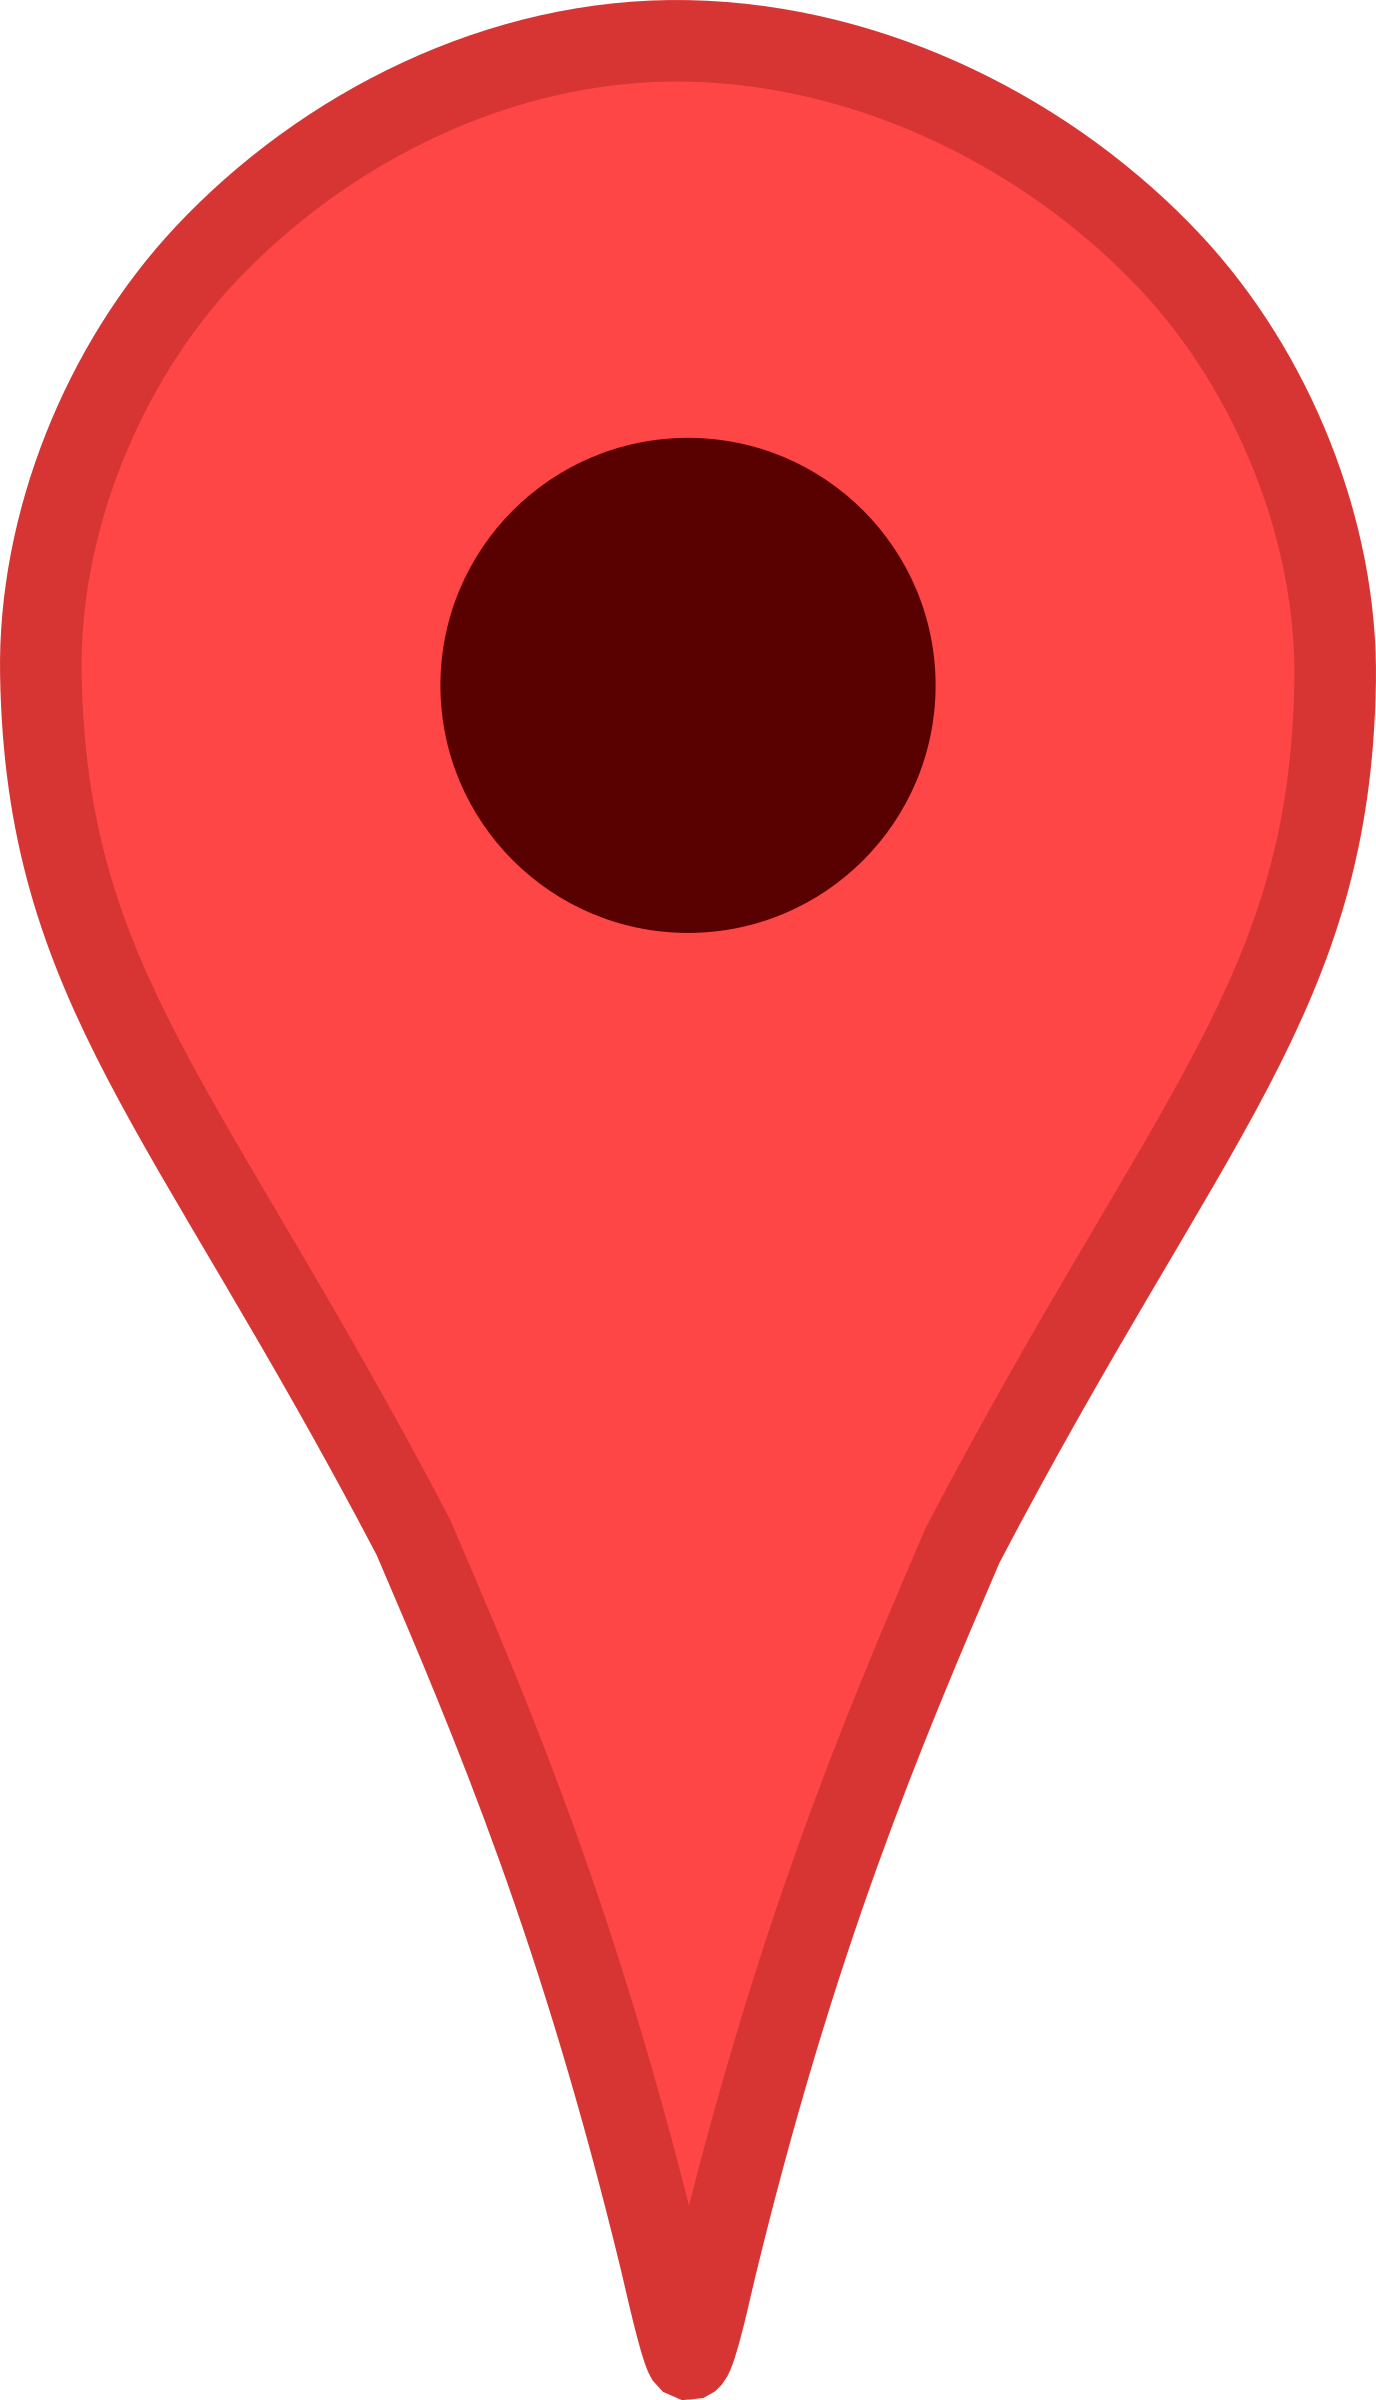 Location Map Pin Home Black Svgvectorpublic Domain Icon Park Reverasite